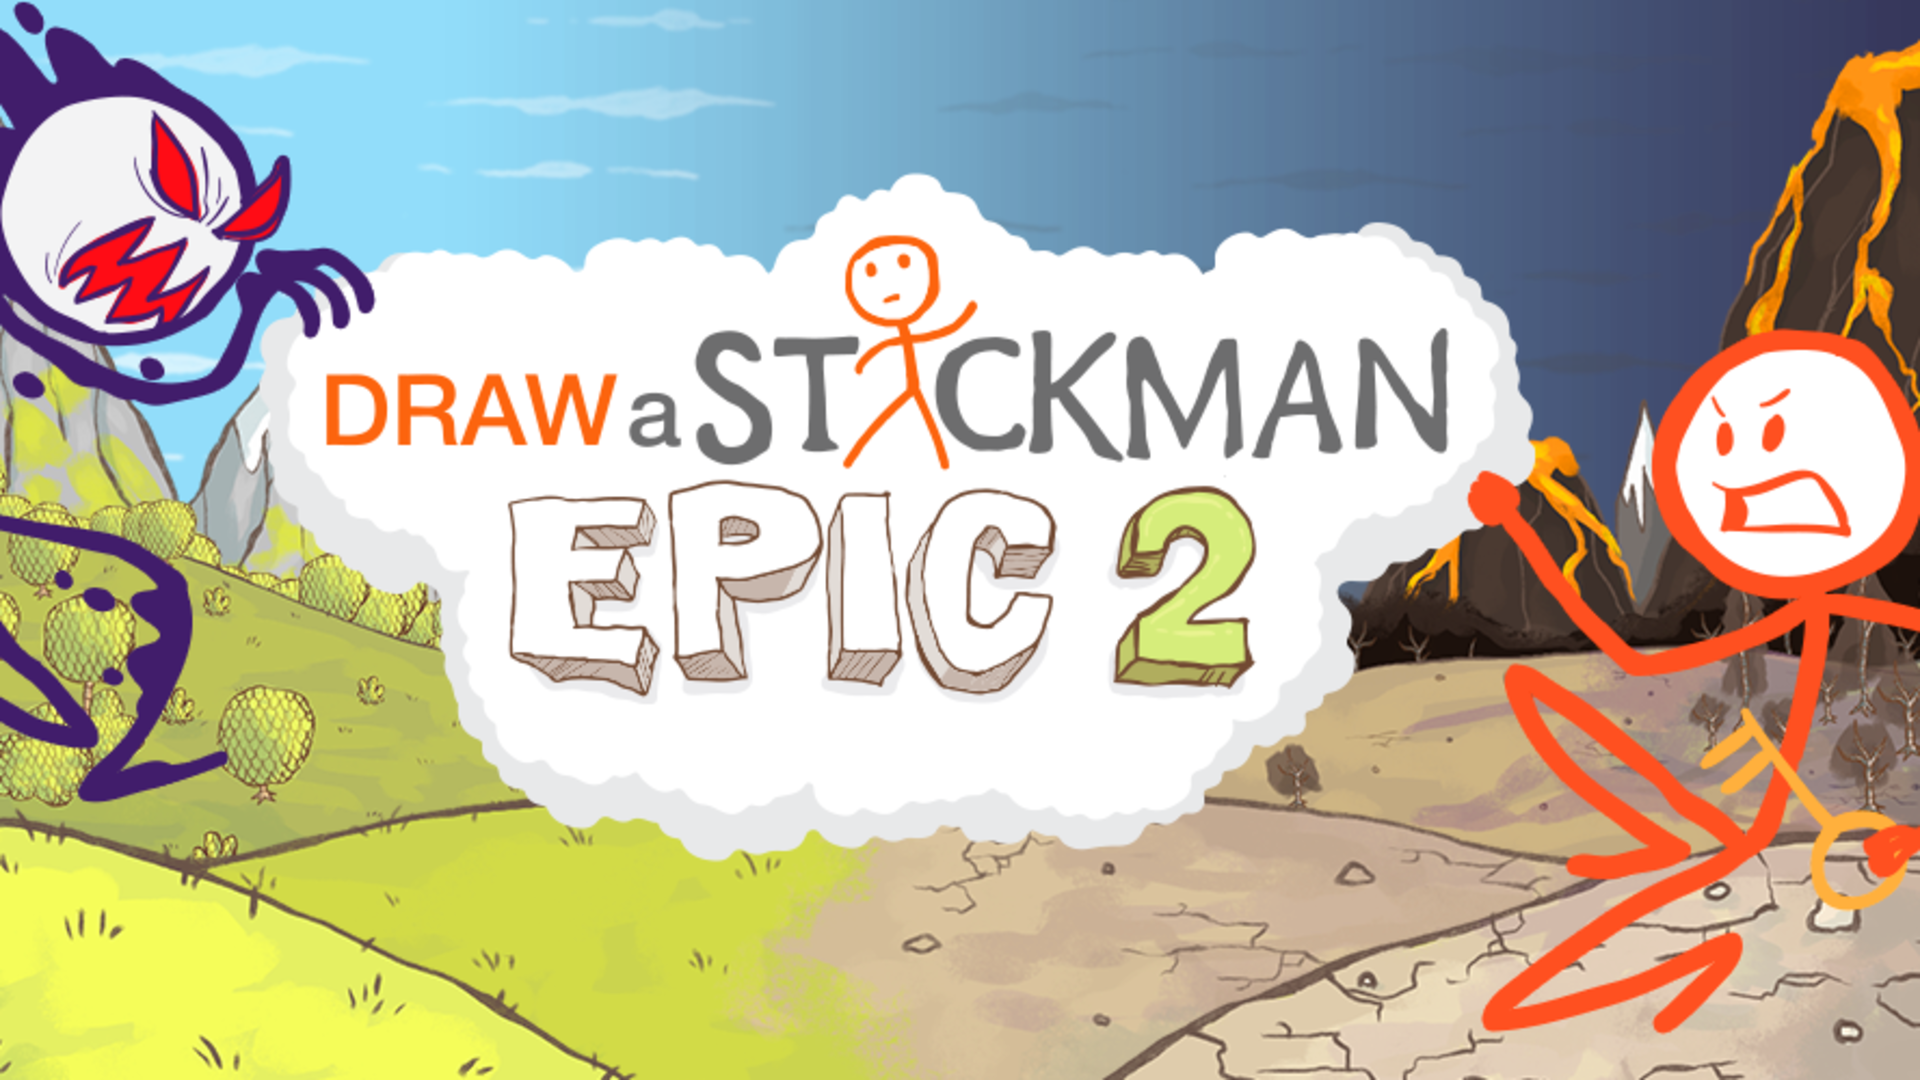 Banner of Desenhe um Stickman: EPIC2 